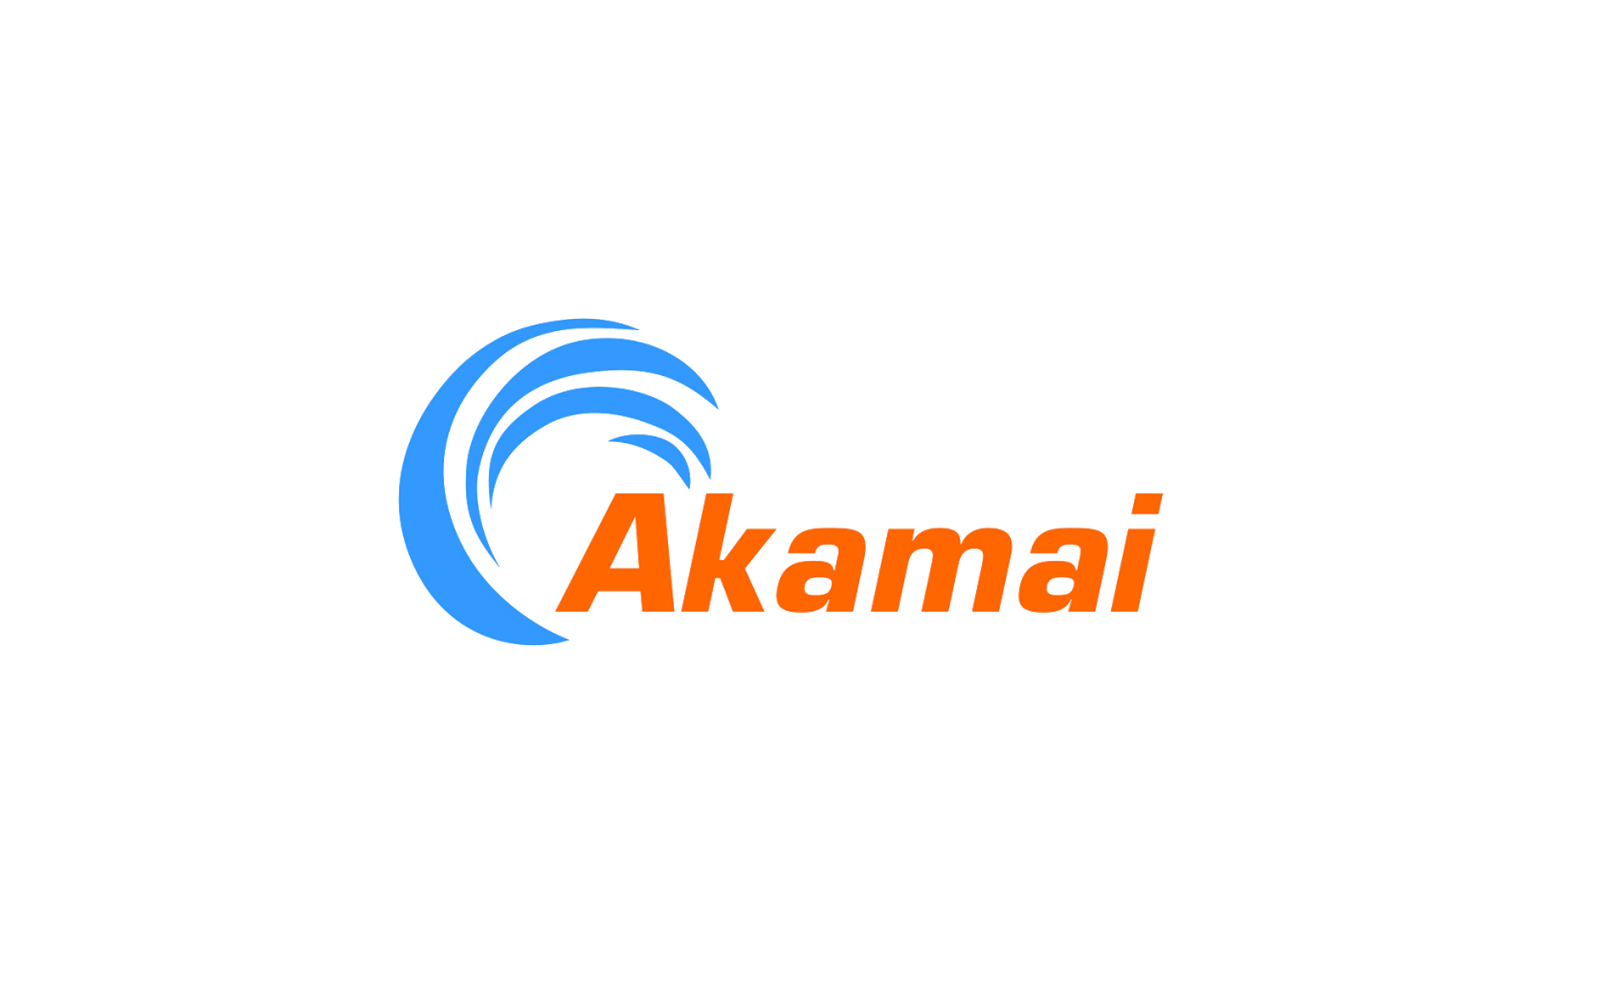 Akamai Hosting Akamai Logo Company Openings Job User Freshers Interface ...